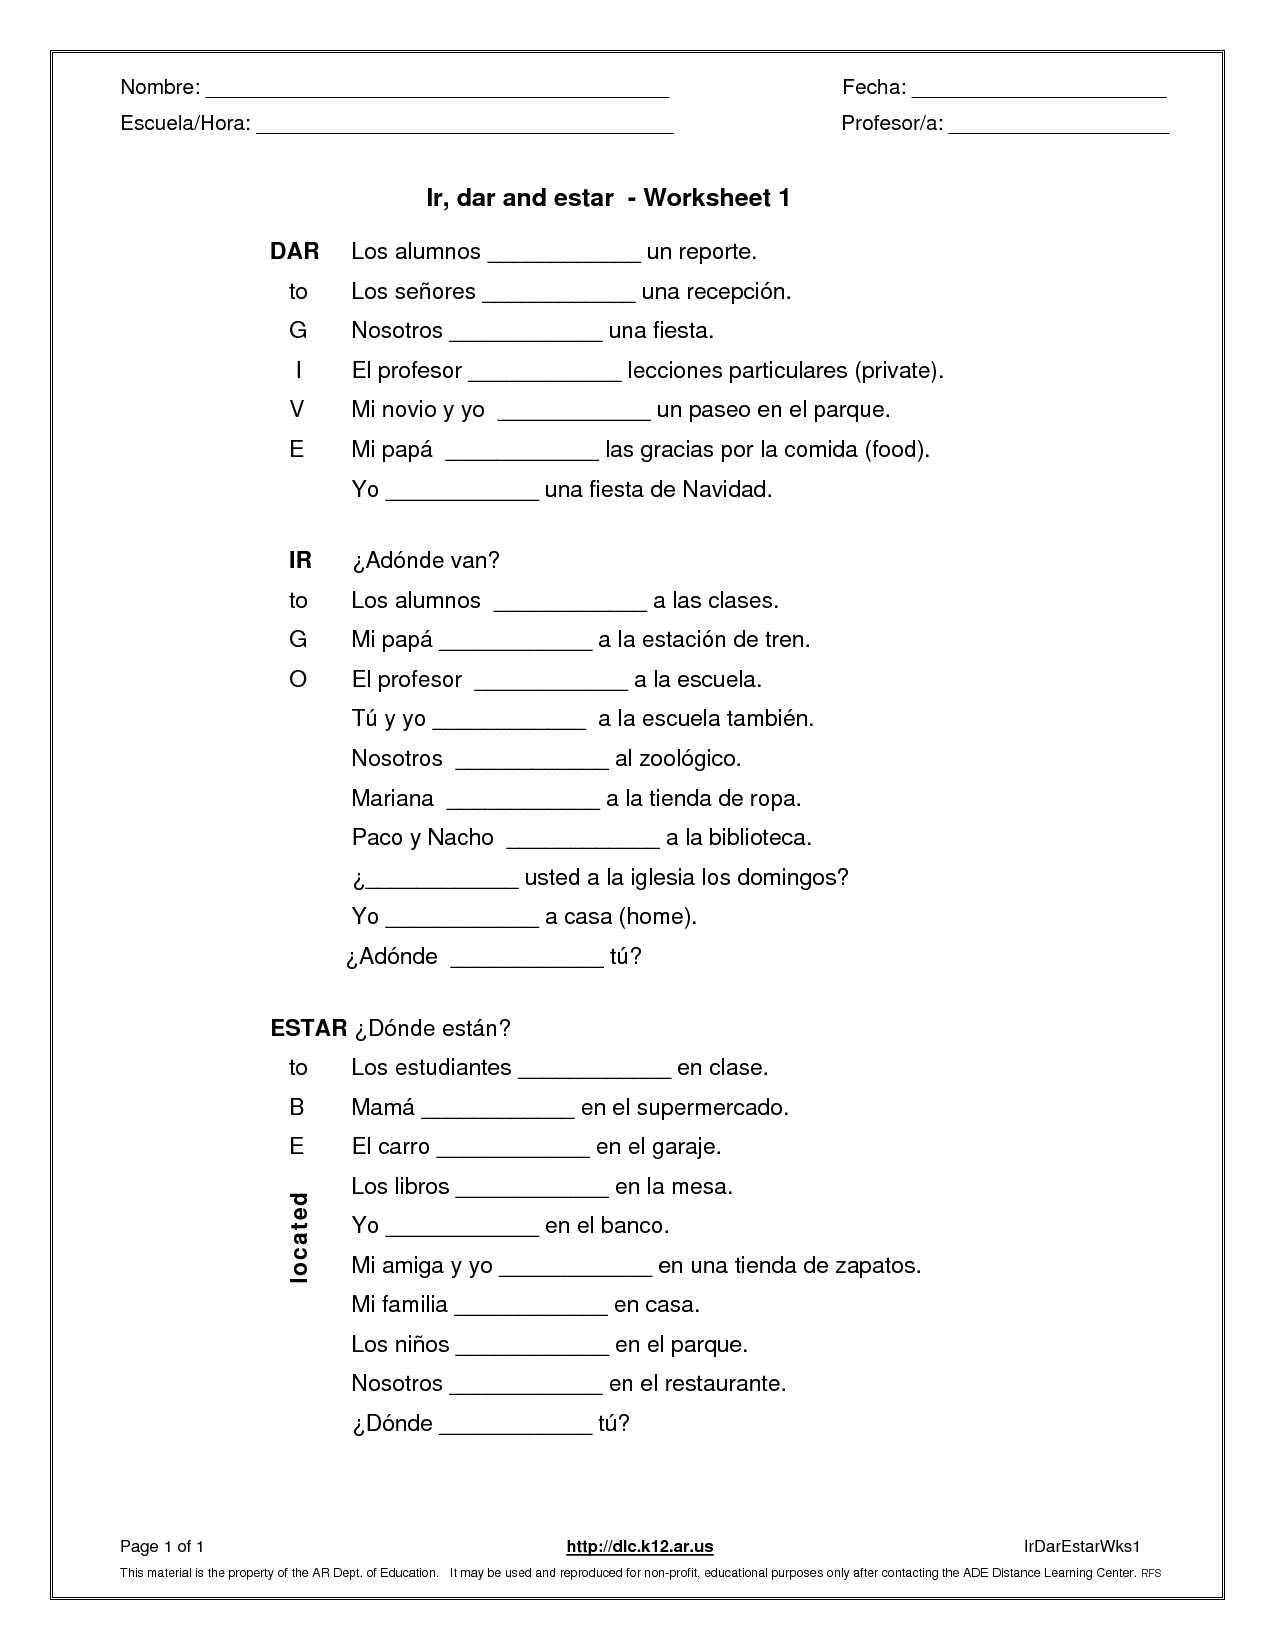 12-best-images-of-spanish-worksheets-on-ser-spanish-ser-worksheet-1-answer-key-spanish-ser